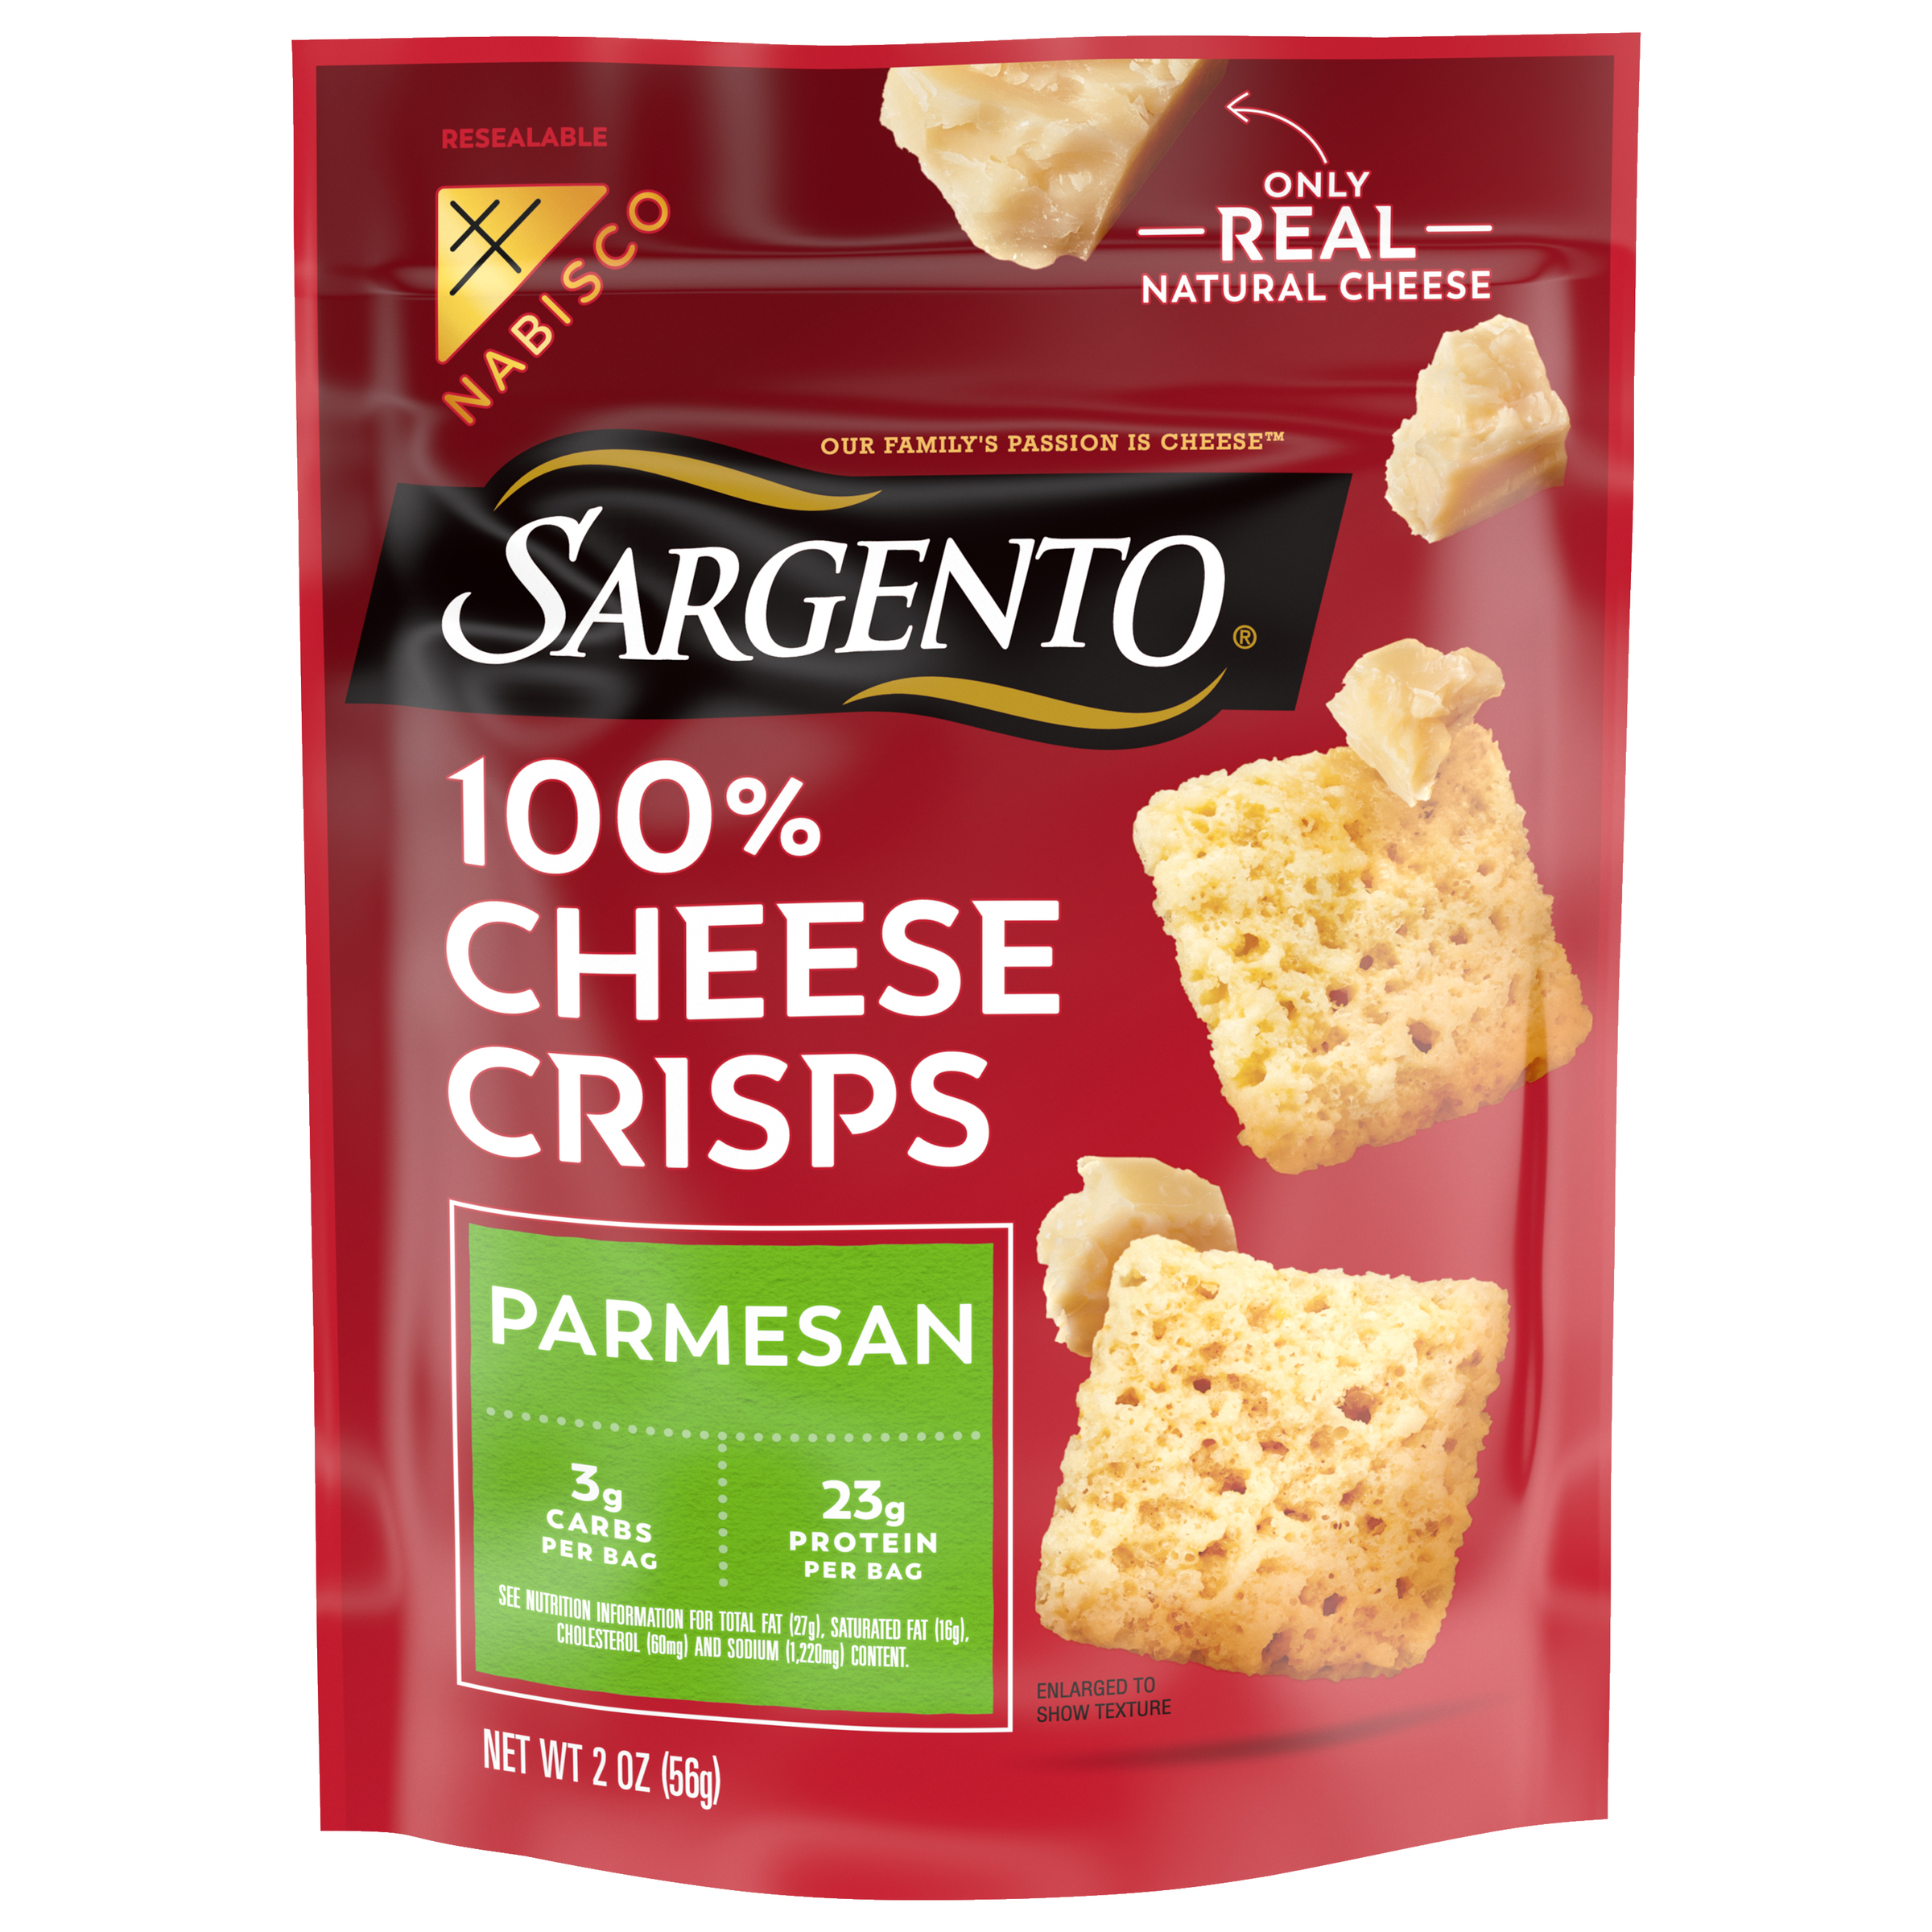 SARGENTO 100 % Cheese Crisps Parmesan Crackers 0.13 LB